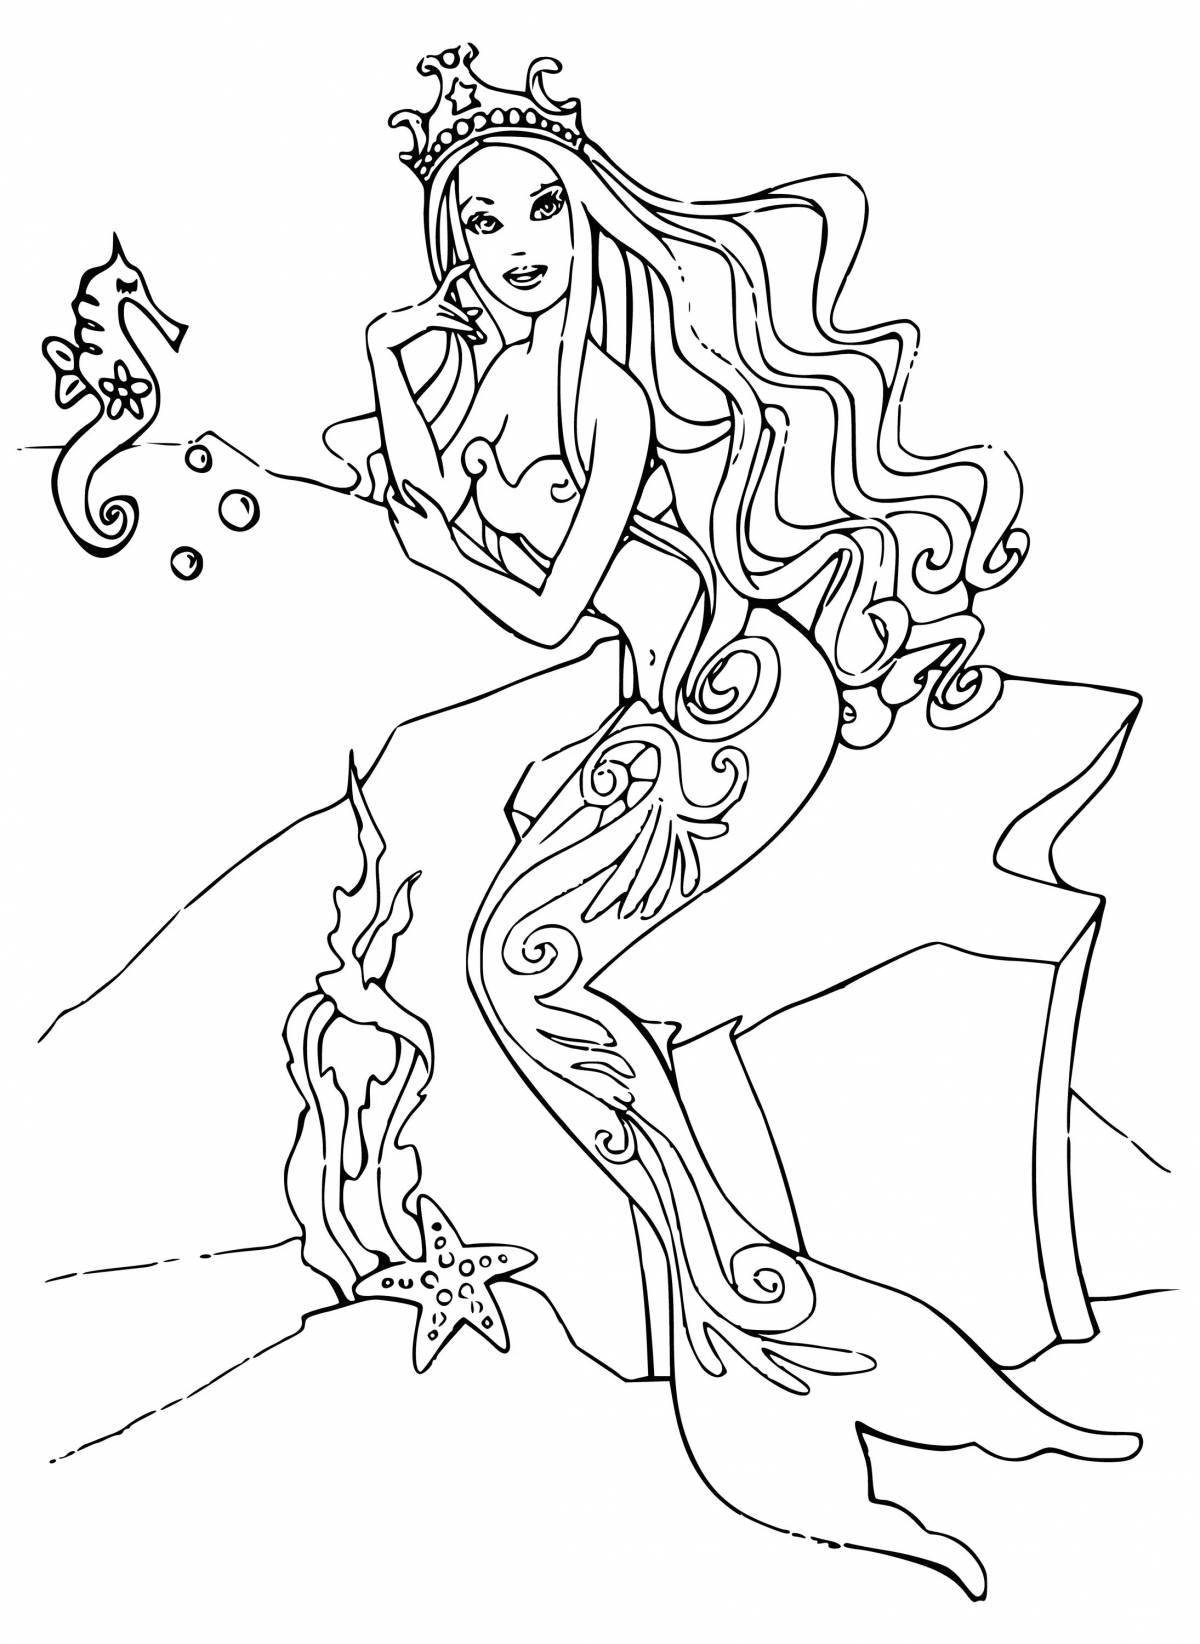 Dreamy barbie mermaid coloring book for girls